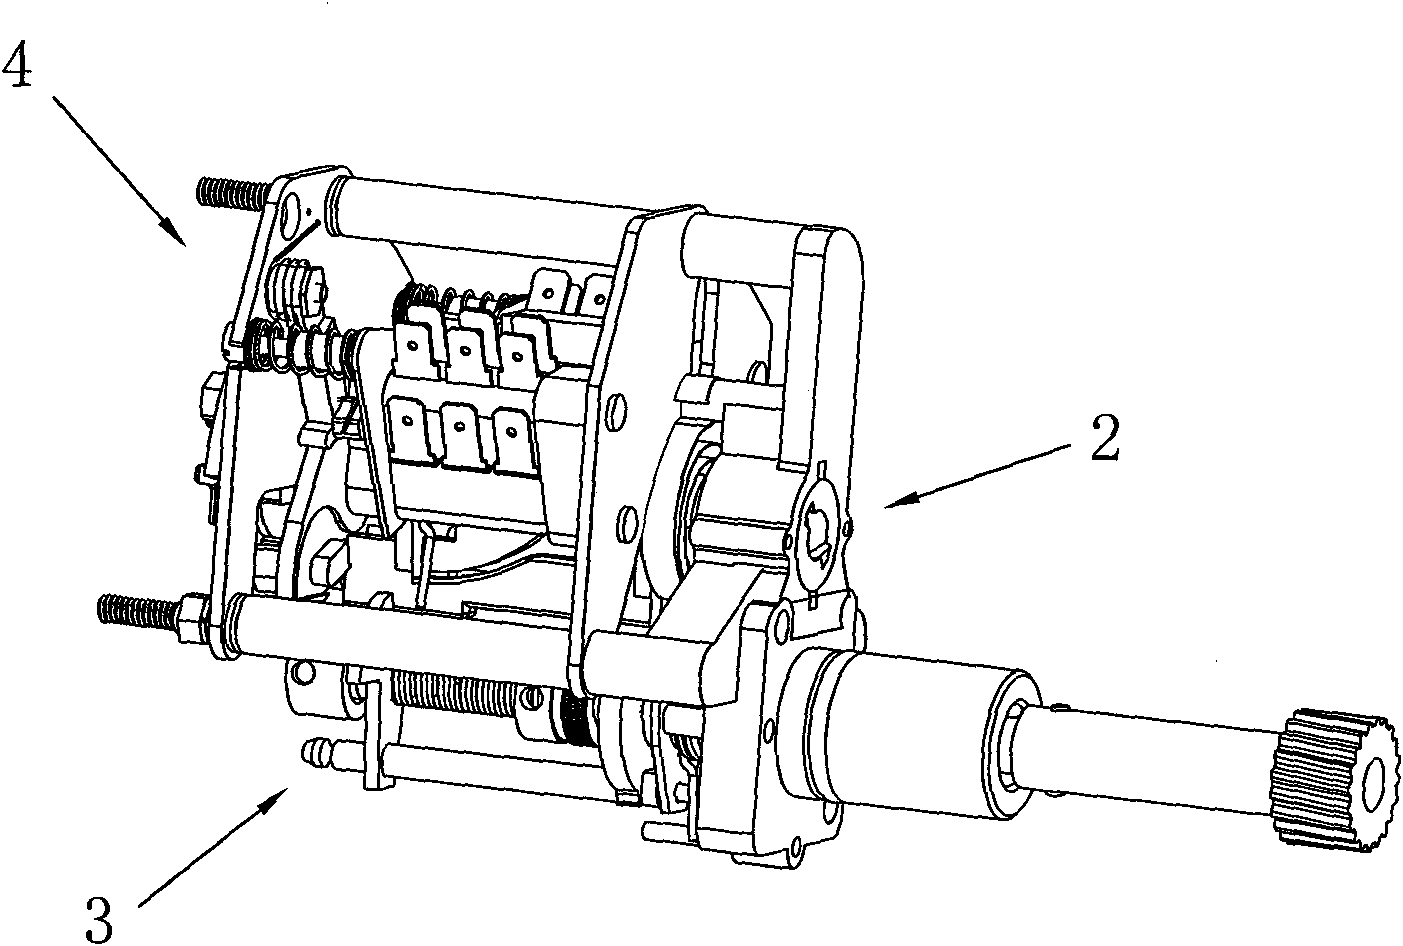 Nuclear grade valve electric device